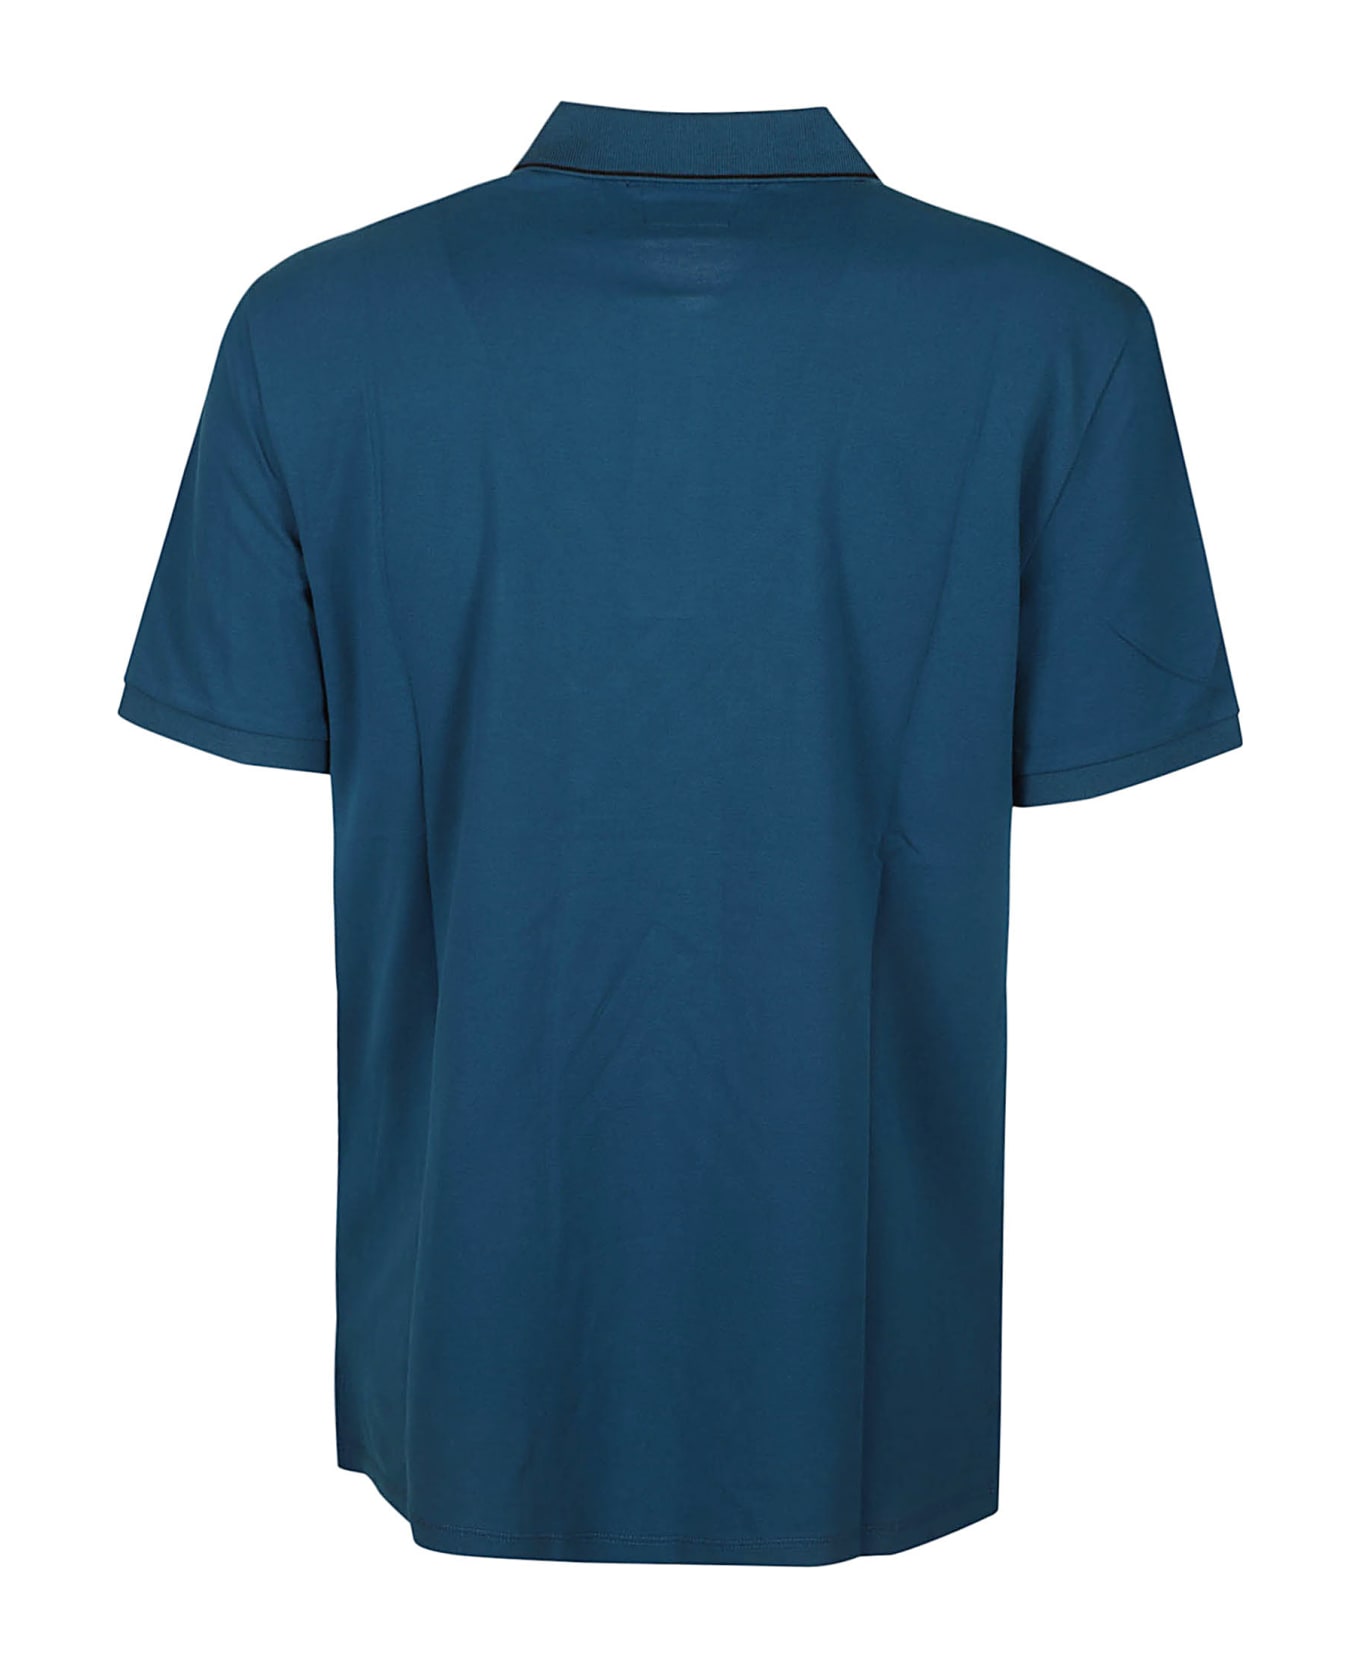 C.P. Company Stretch Piquet Polo Shirt - INK BLUE シャツ